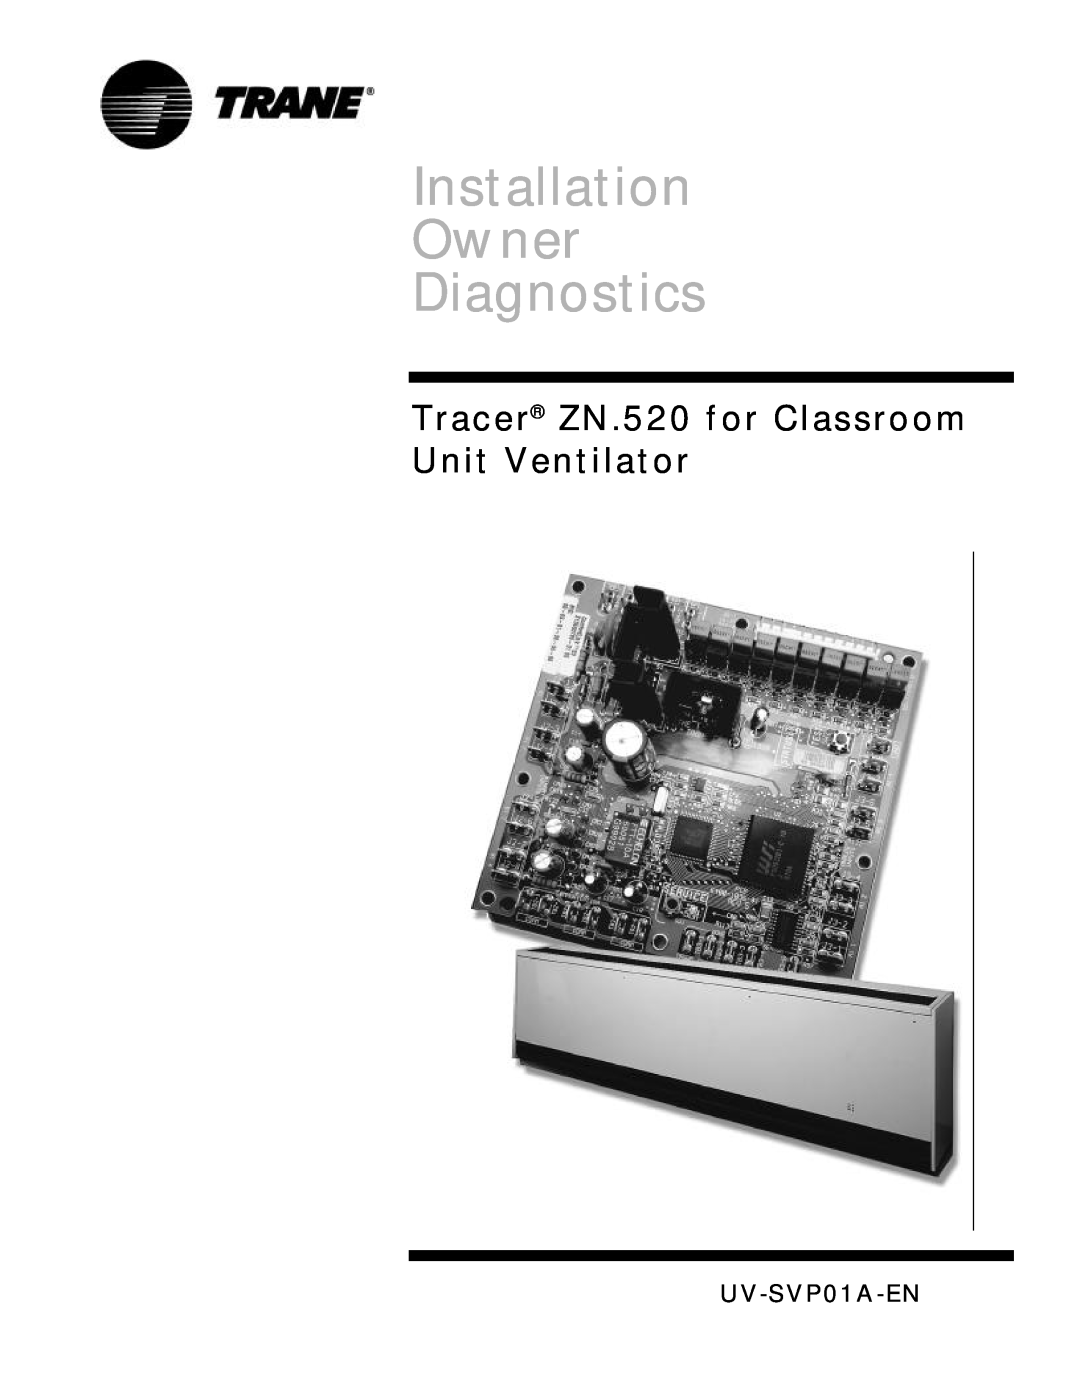 Trane Tracer Unit Ventilator manual Tracer ZN.520 for Classroom Unit Ventilator, UV-SVP01A-EN 